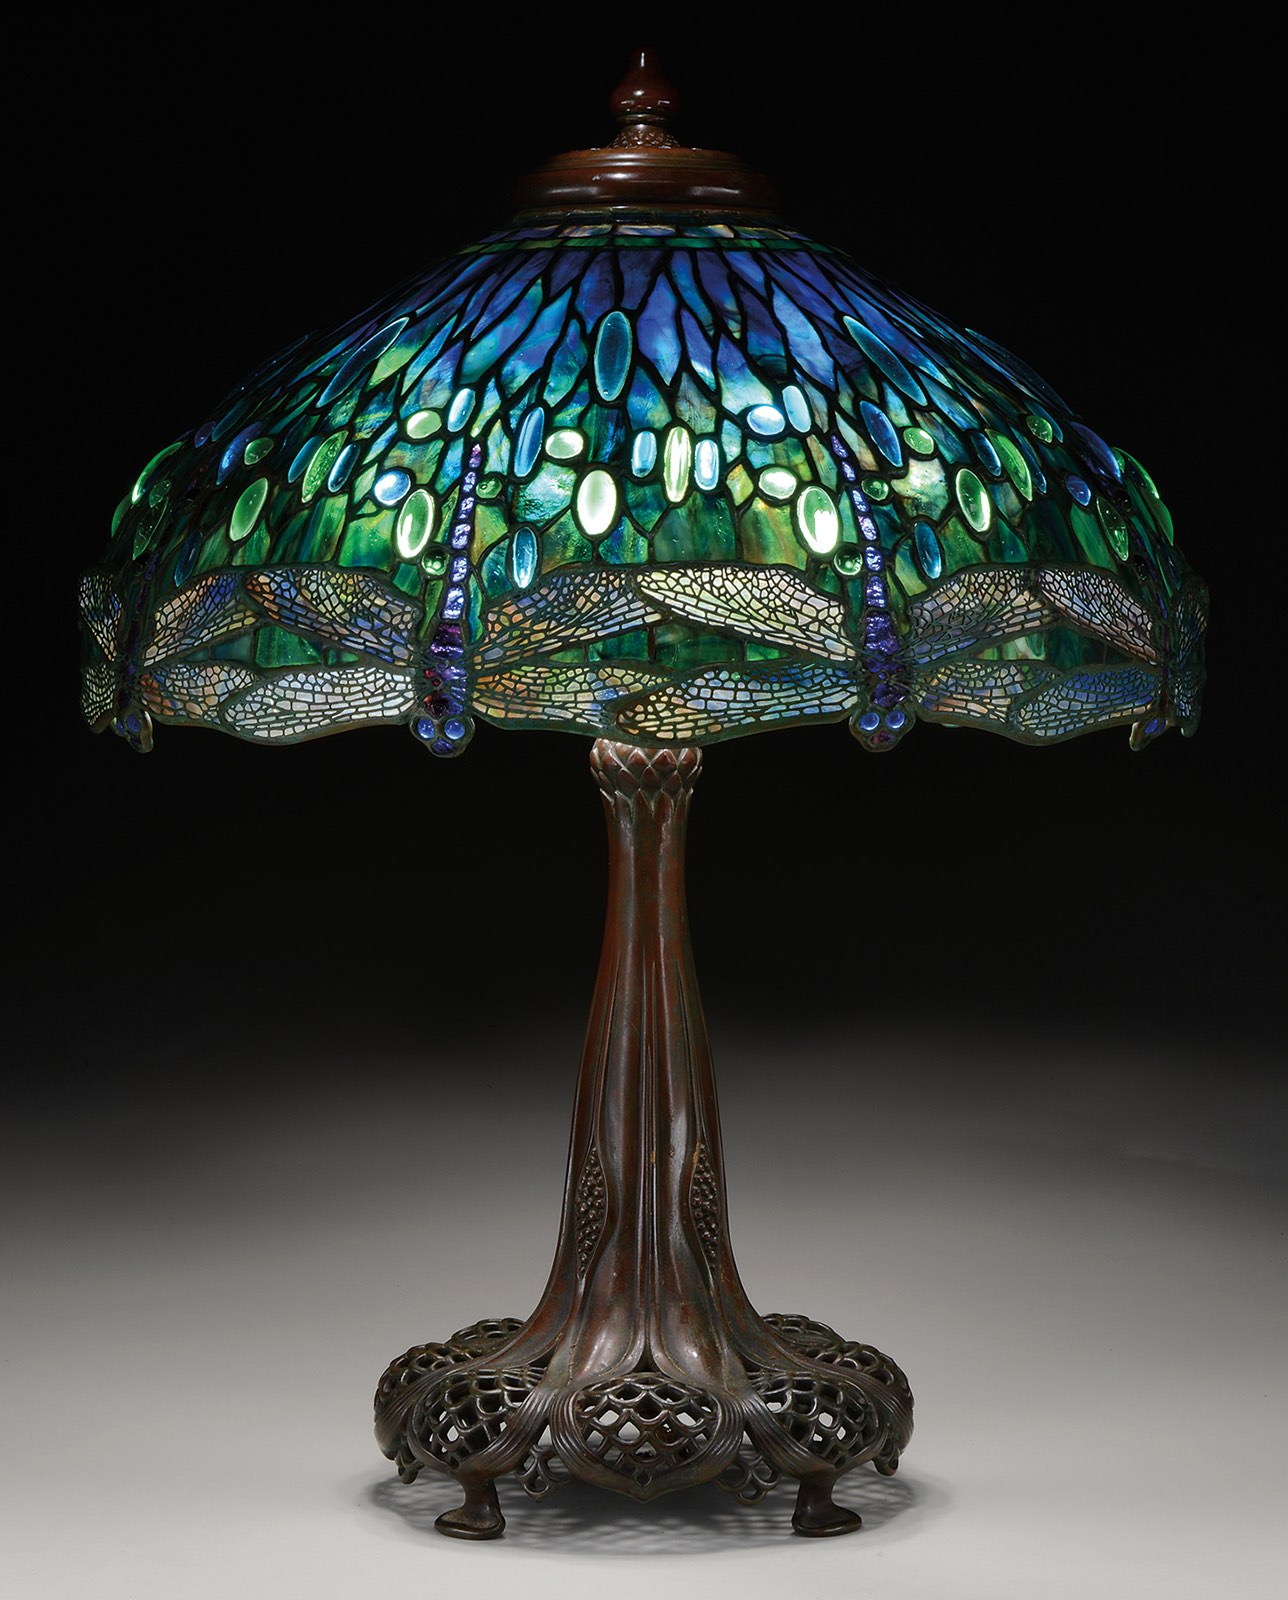 Lot 1259, a Tiffany Dragonfly Lamp estimated at $120,000-180,000.